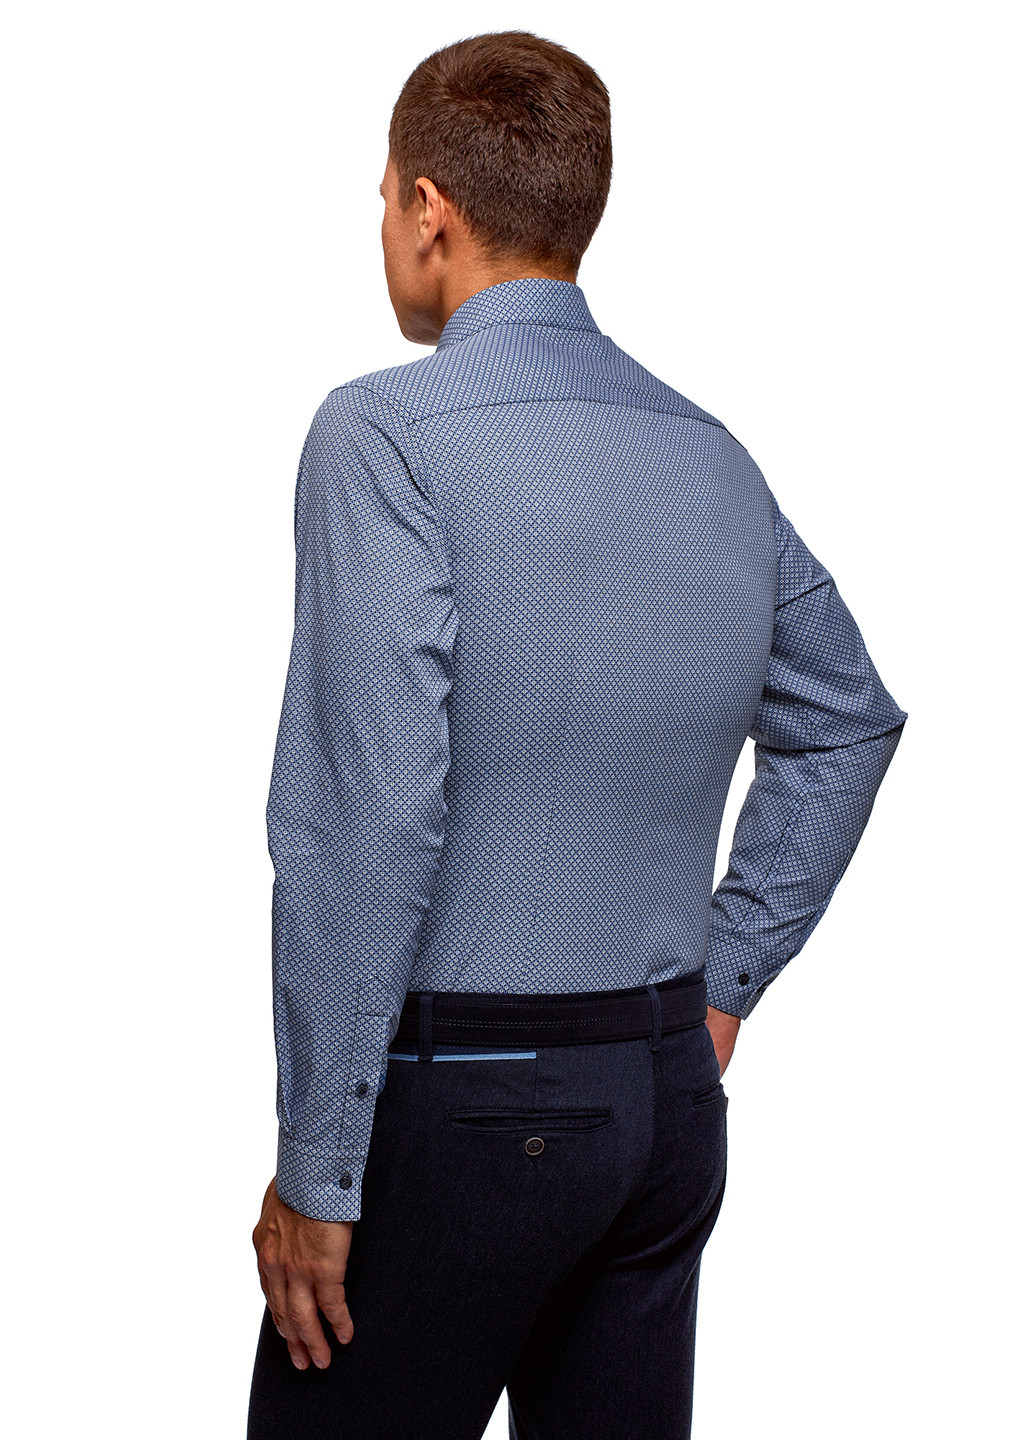 Бледно-синяя кэжуал рубашка с геометрическим узором Oodji с длинным рукавом